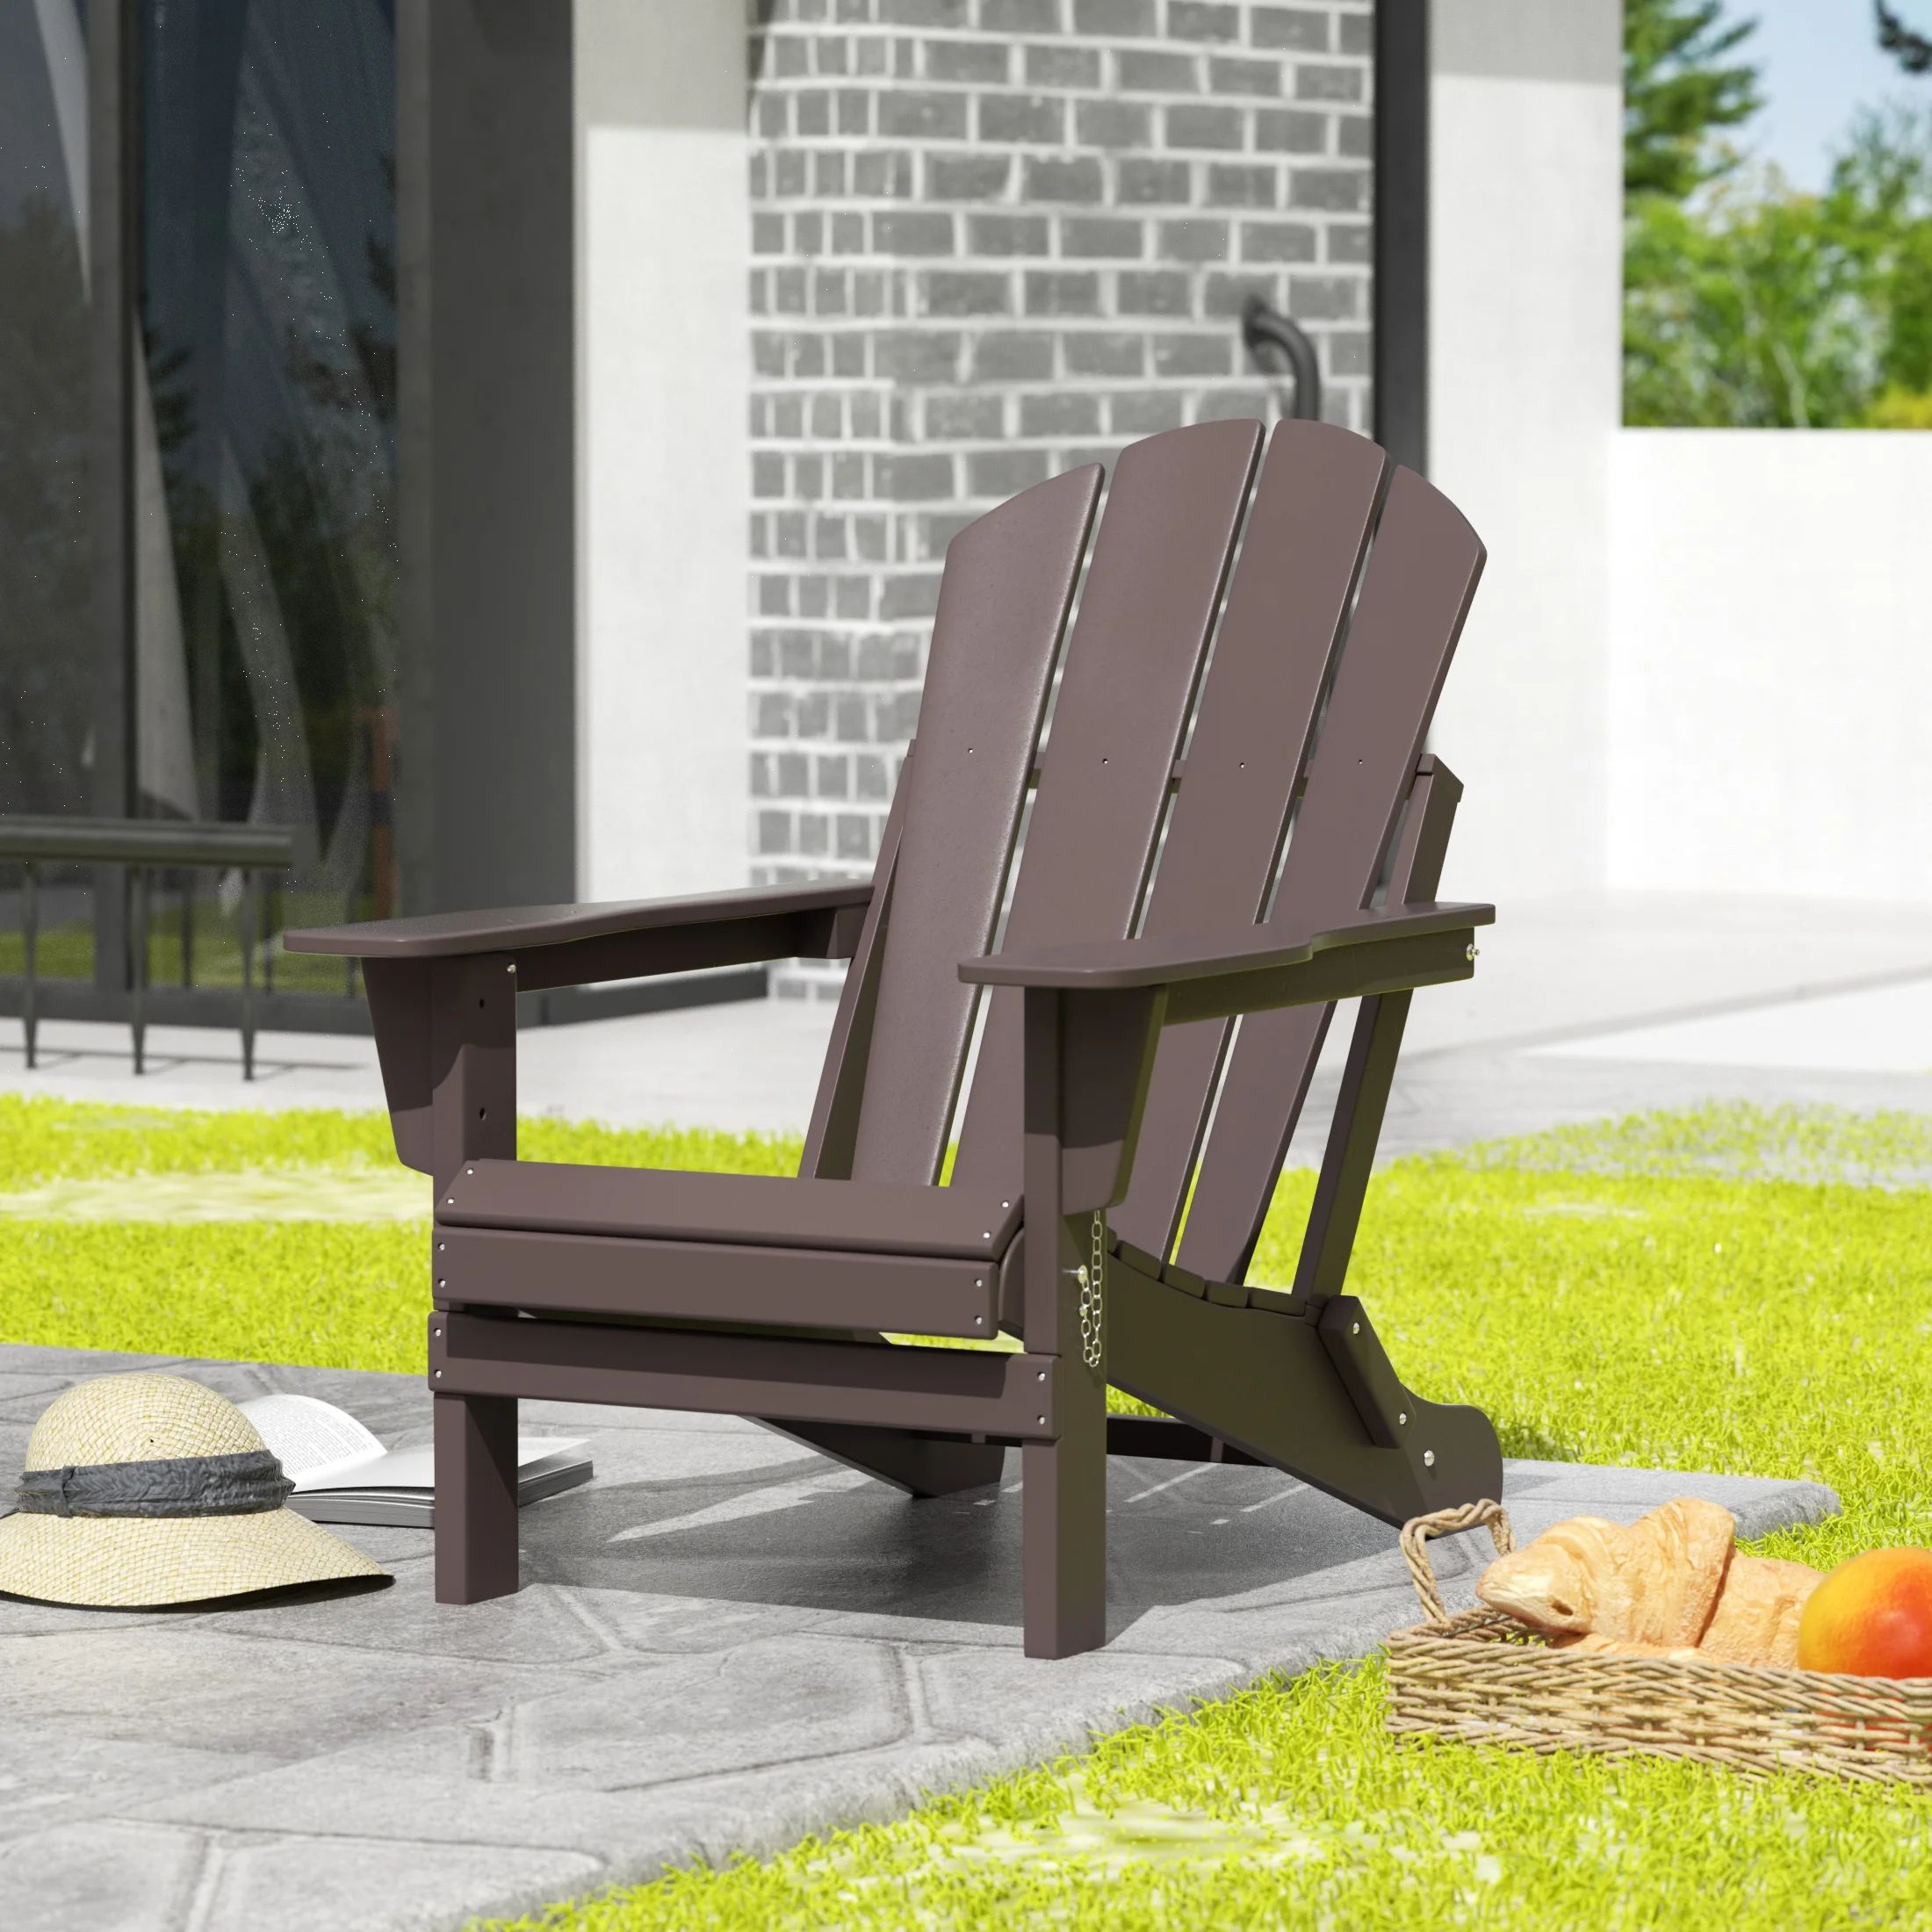 Westintrends Outdoor Folding HDPE Adirondack Chair, Patio Seat, Weather Resistant, Dark Brown | Walmart (US)